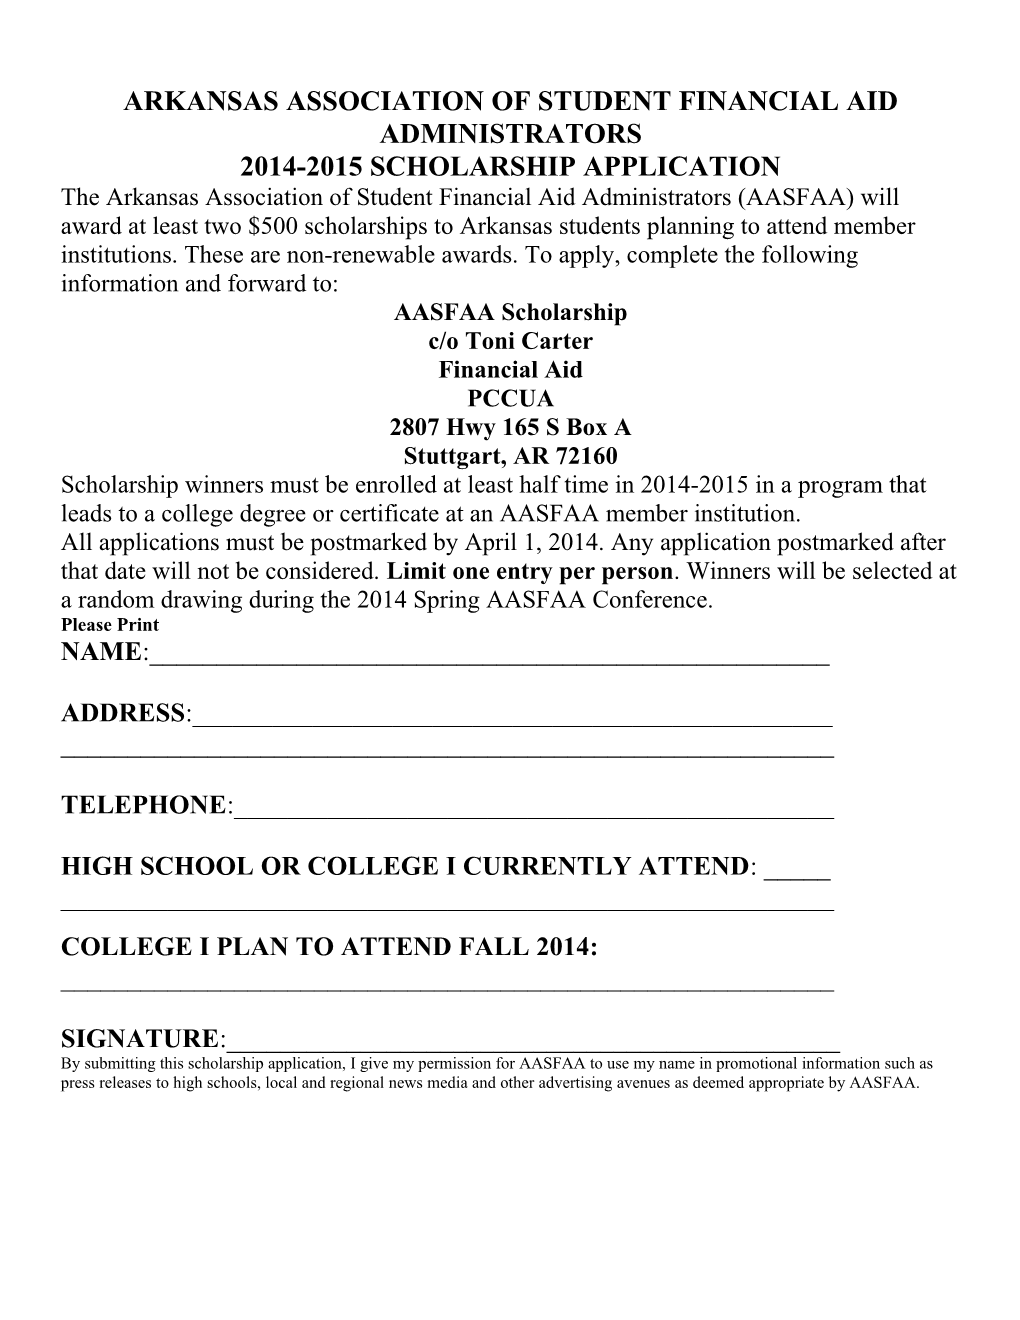 Arkansas Association of Student Financial Aid